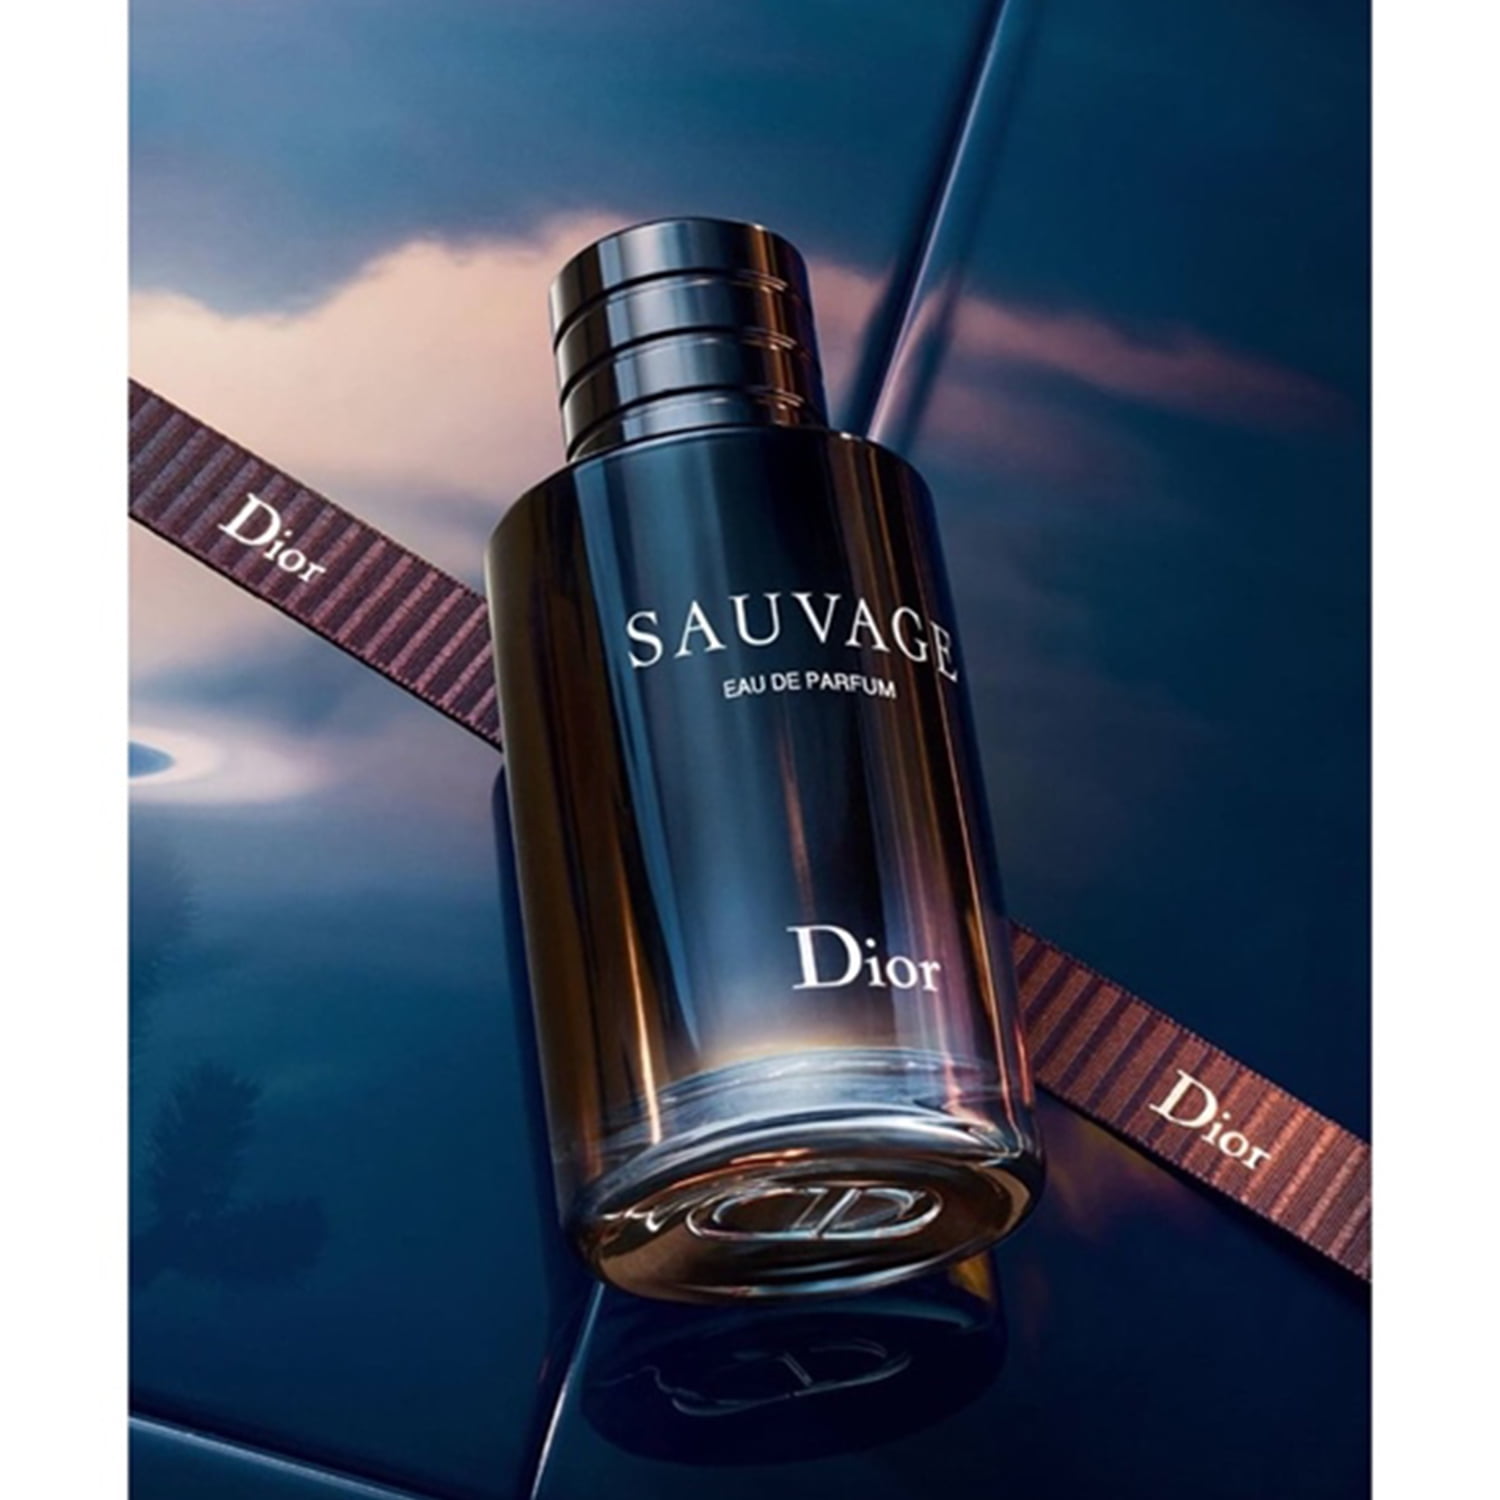 Dior Sauvage Eau de Parfum Cologne for Men, 6.8 Oz - Walmart.com